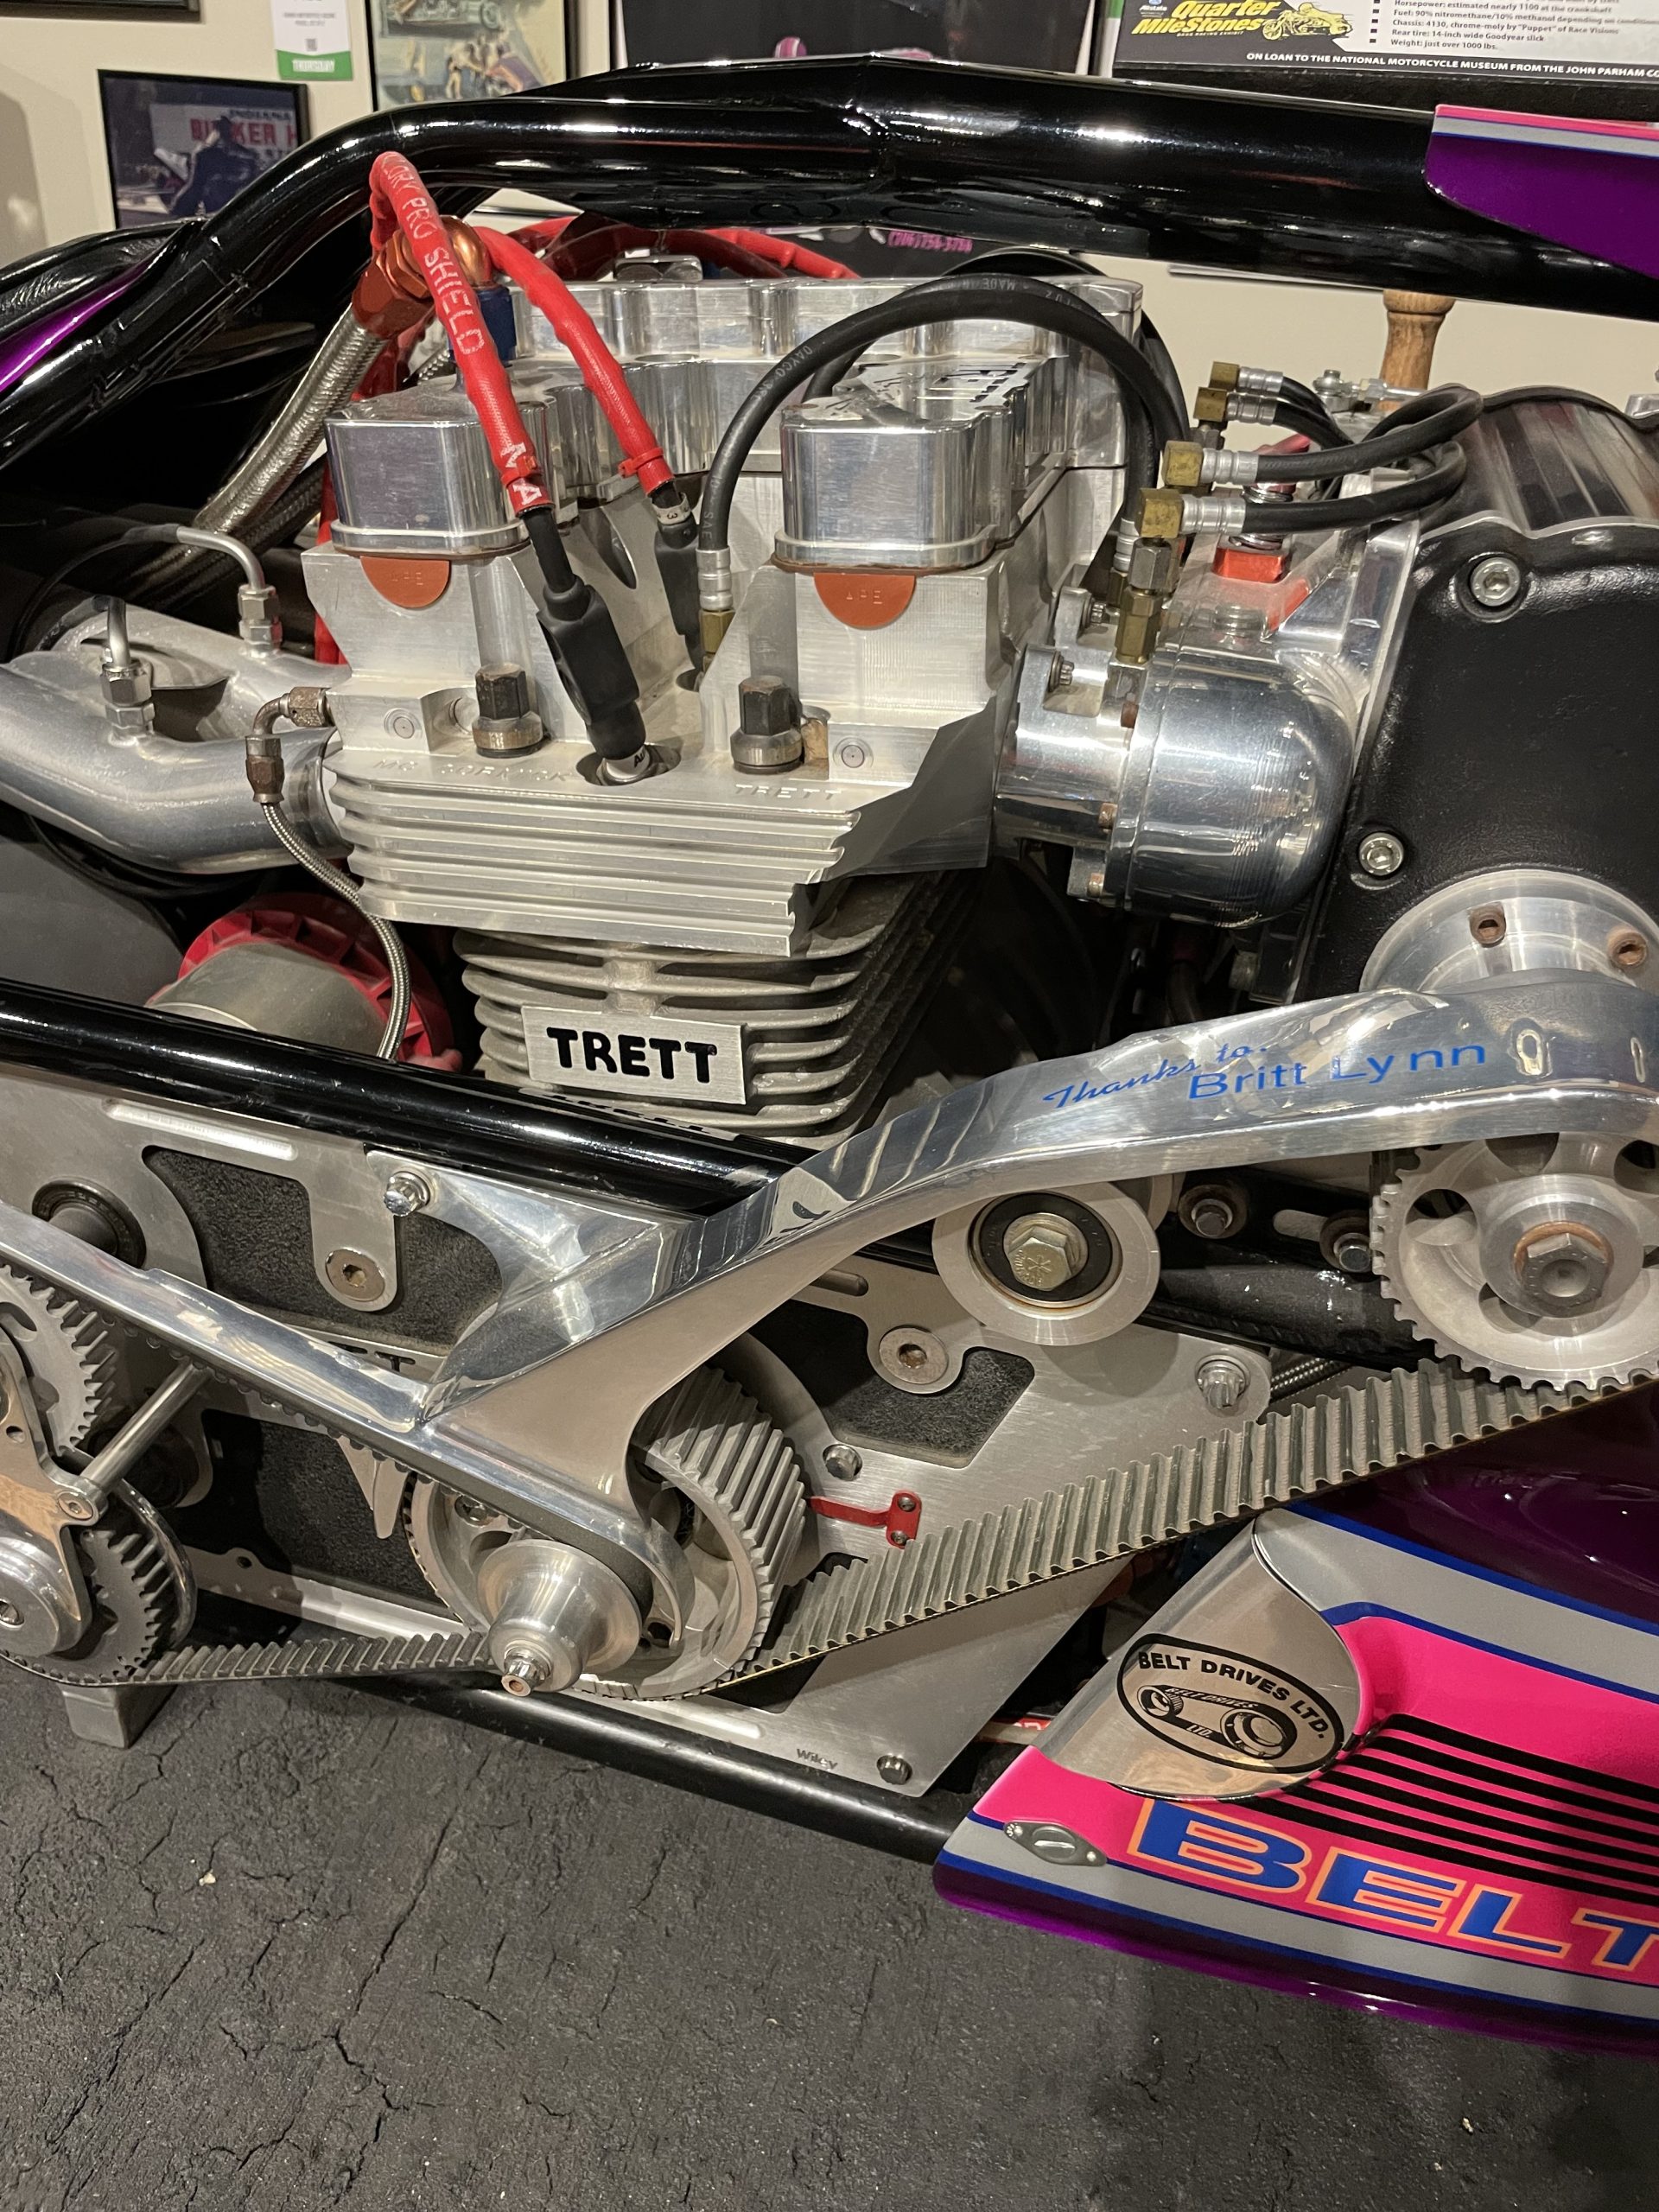 Elmer Trett Motorcycle